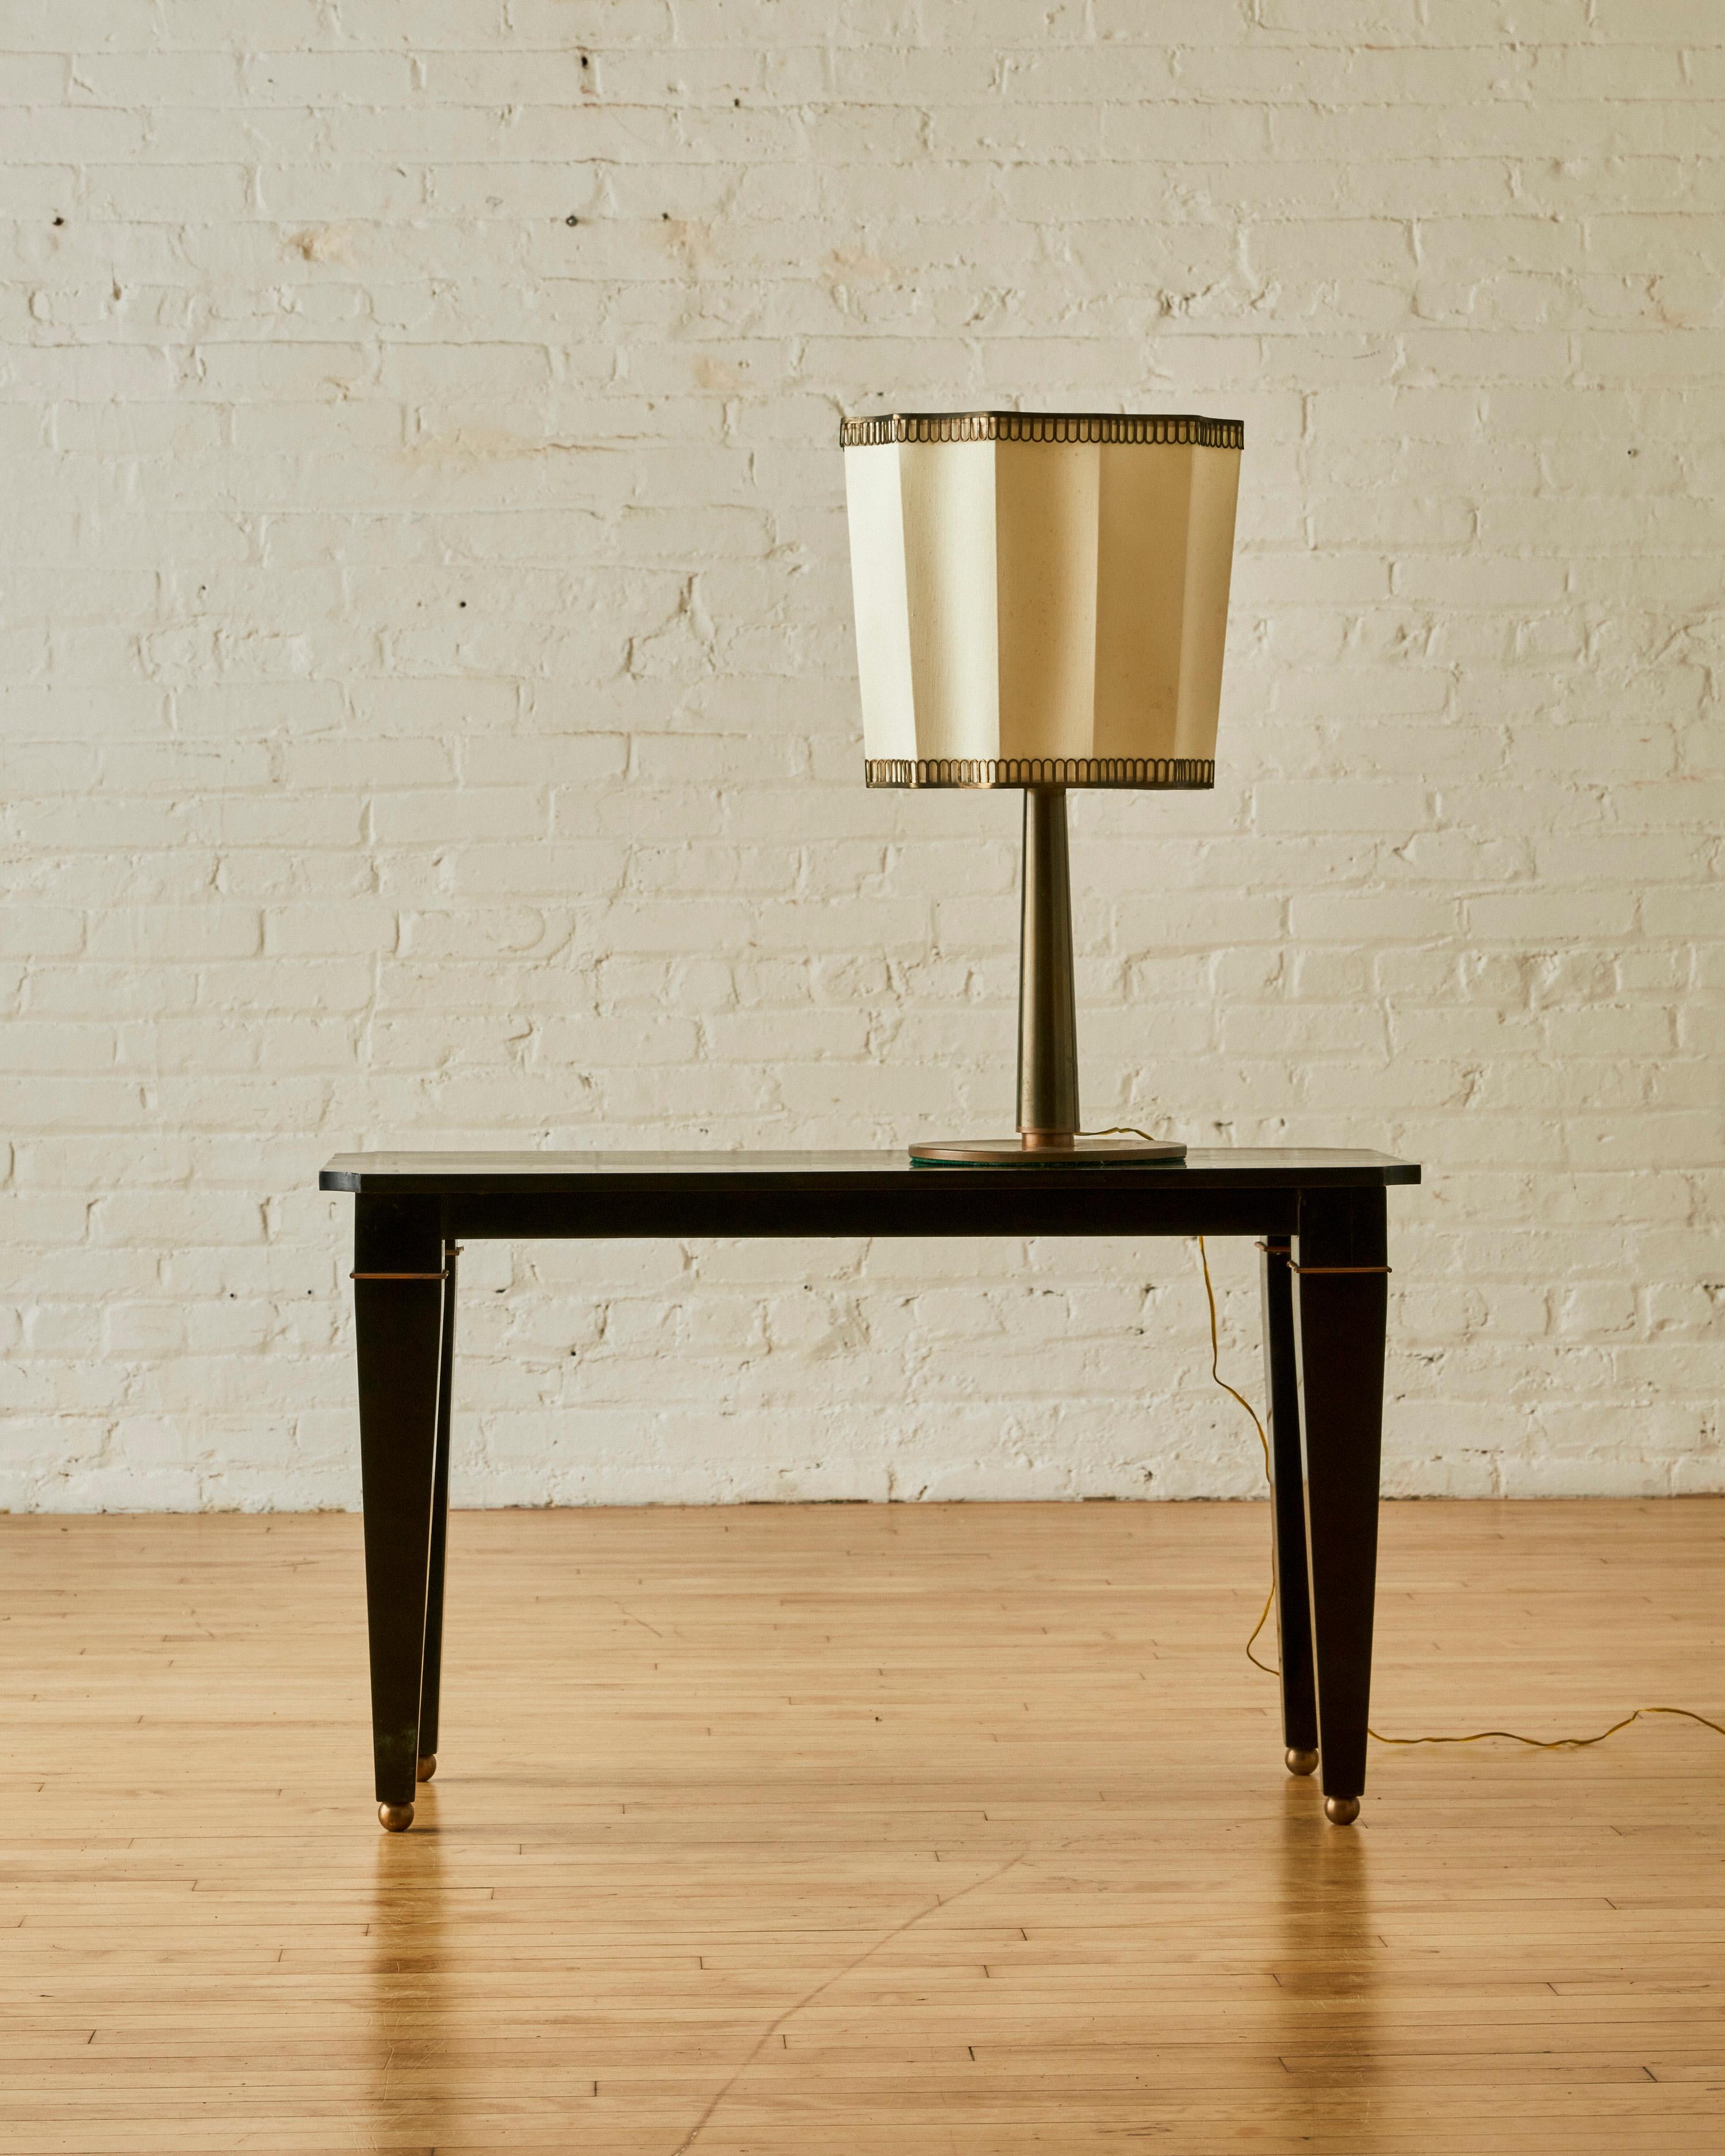 Italian Art Deco Table Lamp with a box pleat shade. 

